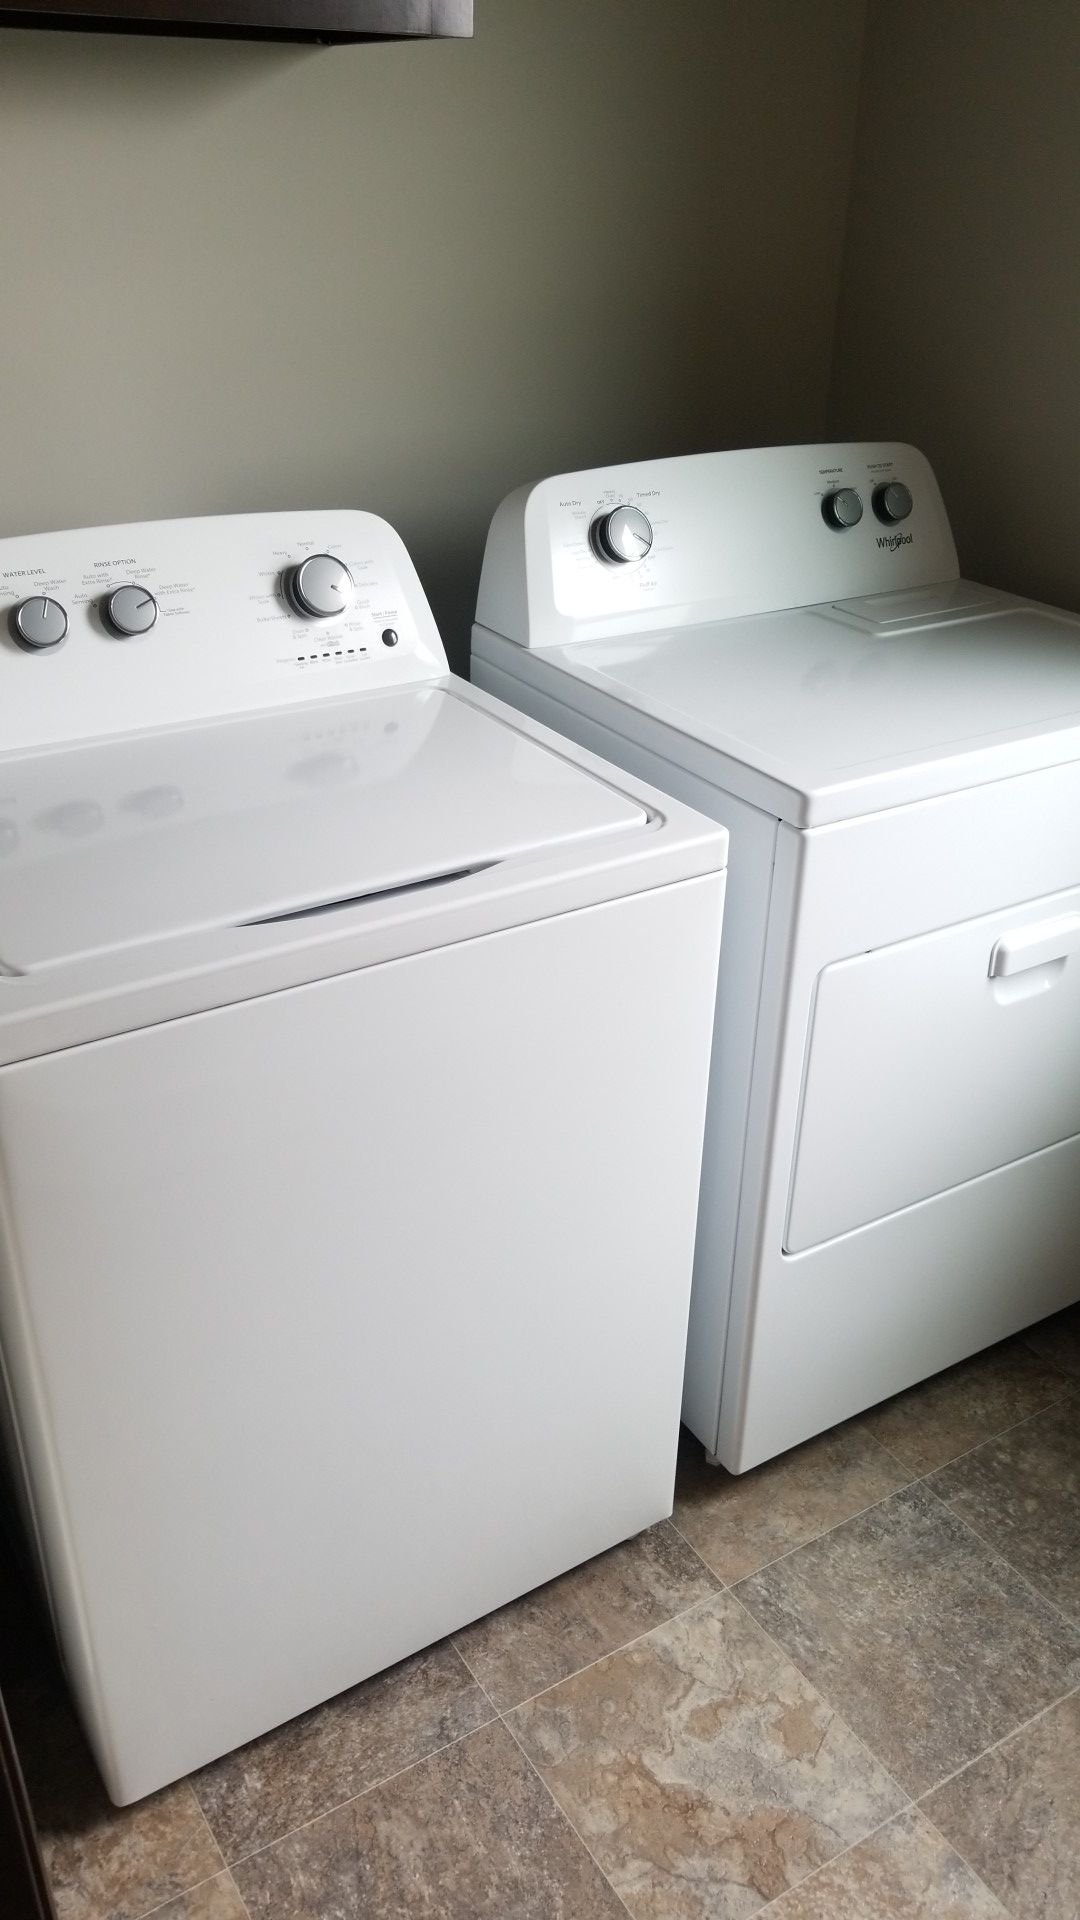 2018 Whirlpool Washer & Dryer